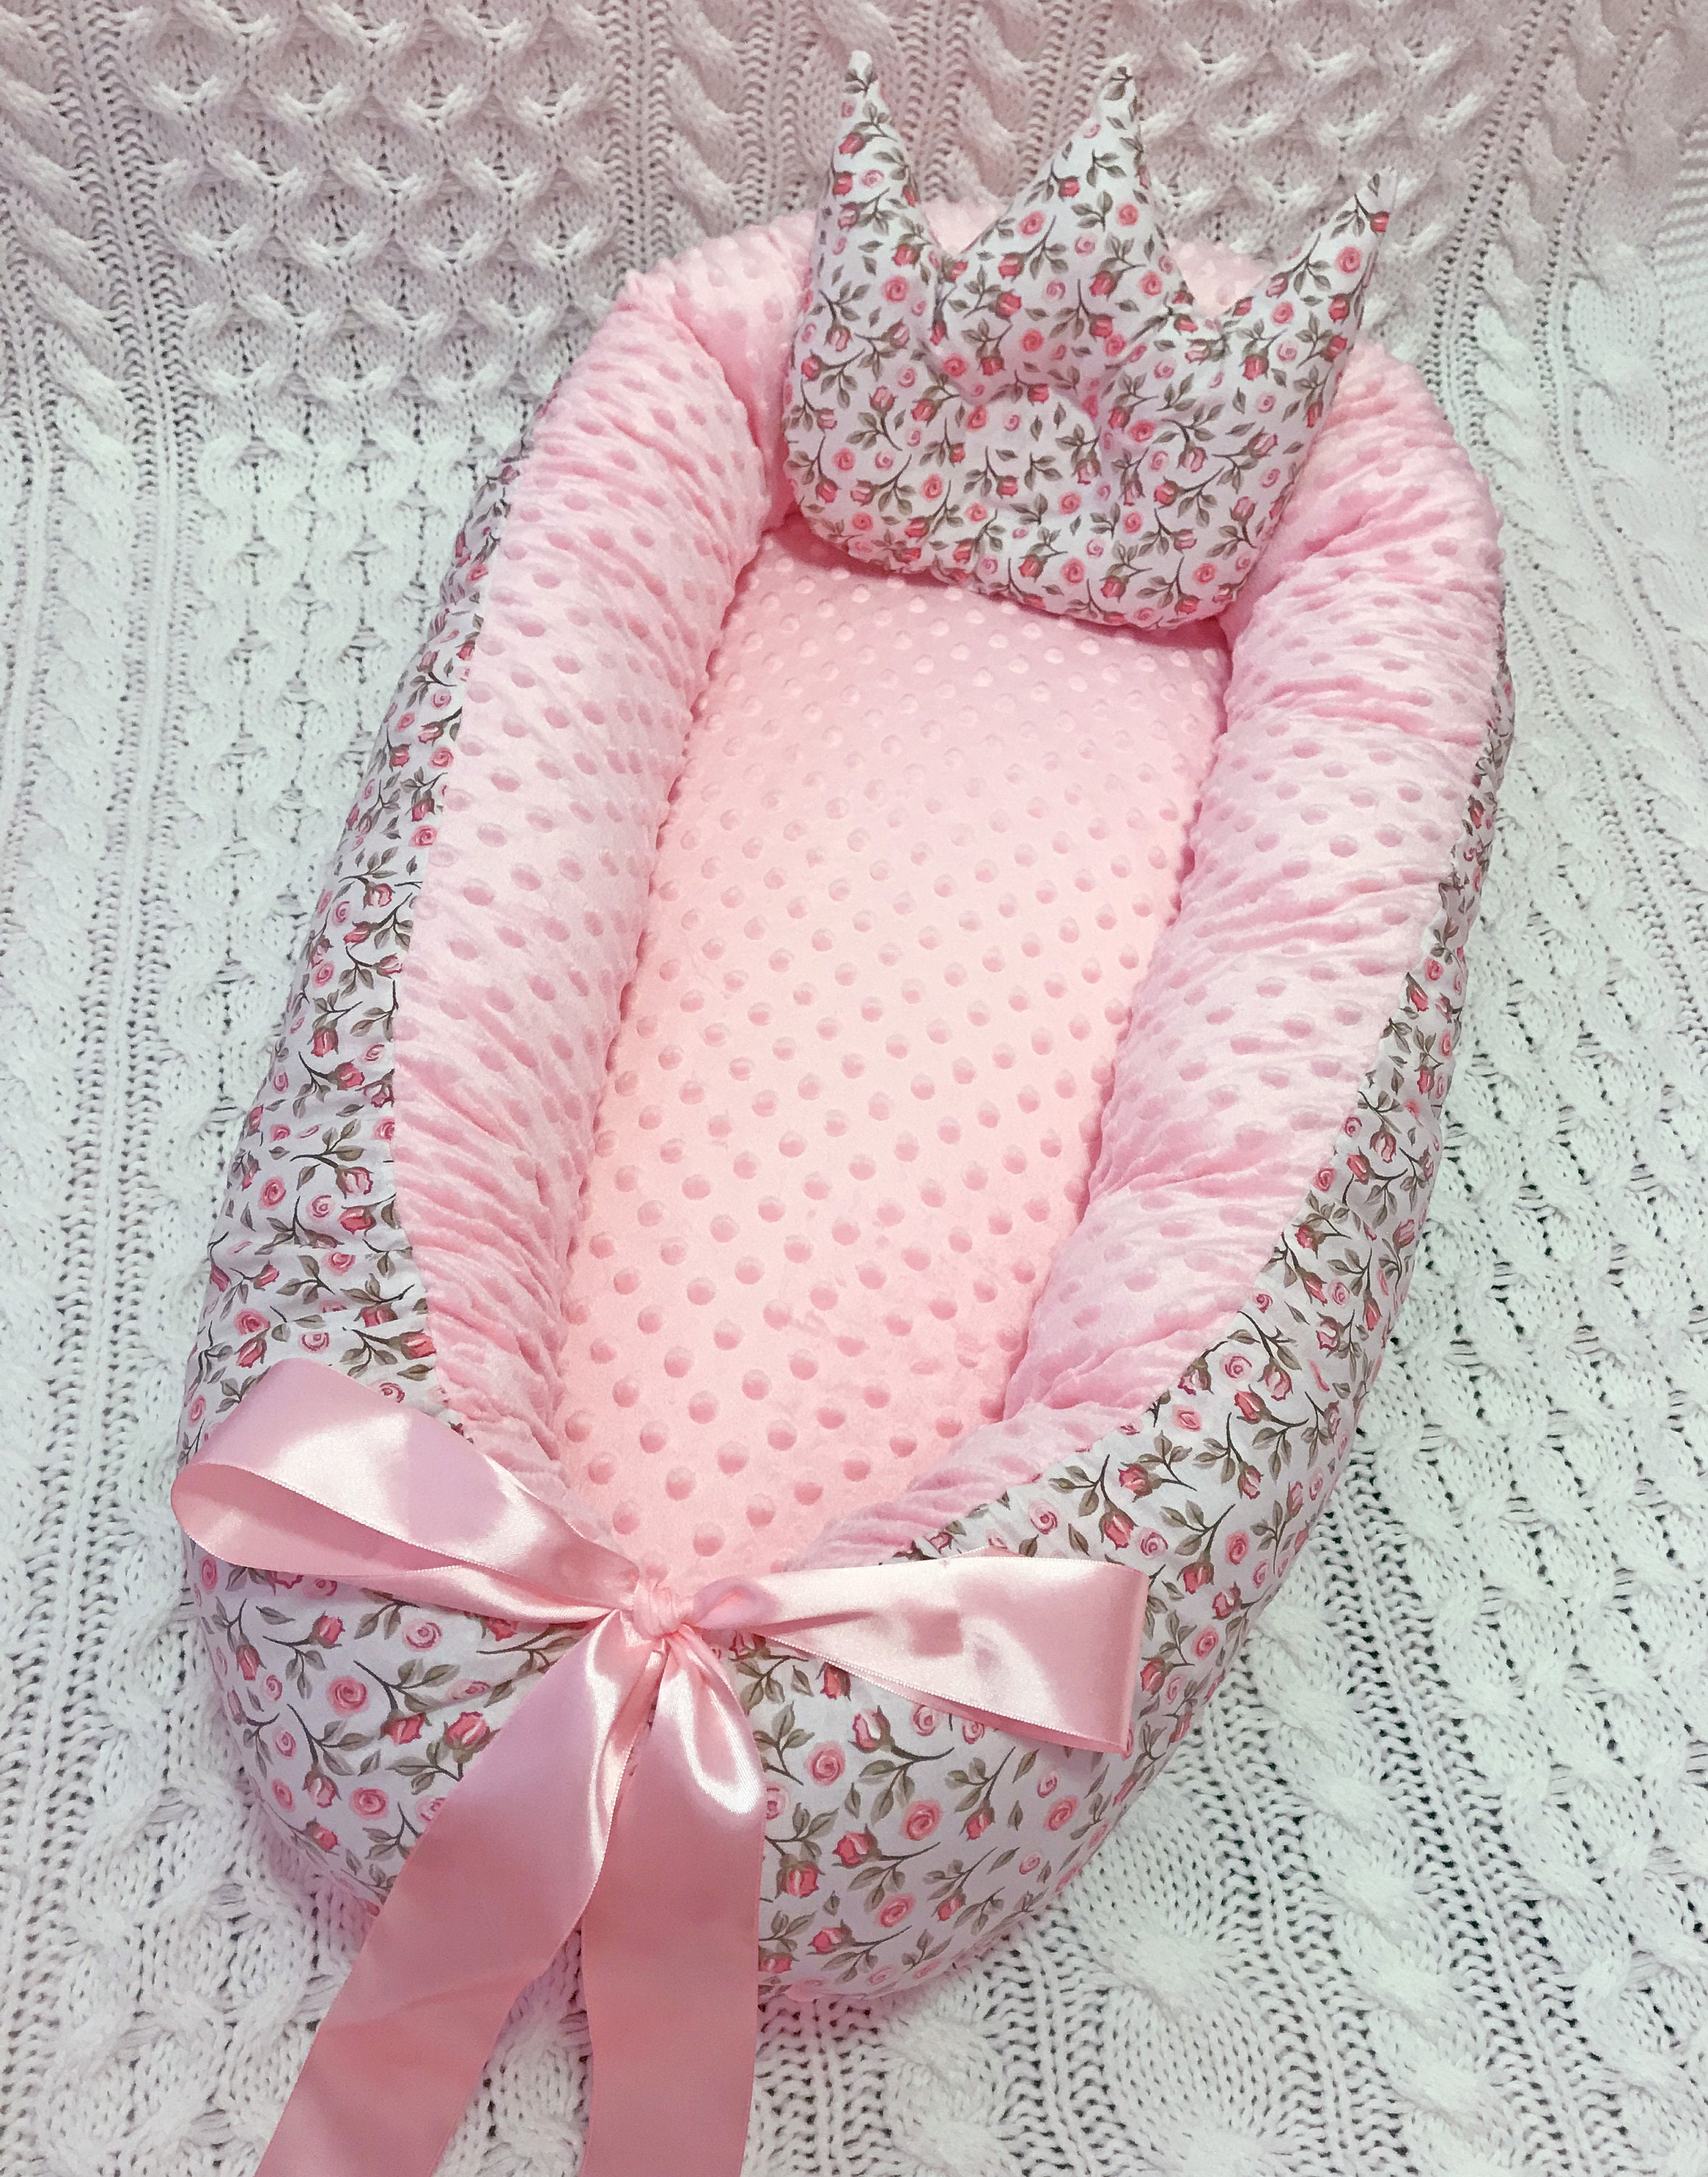 Minky Flover double-sided baby nest for newborn babynest | Etsy